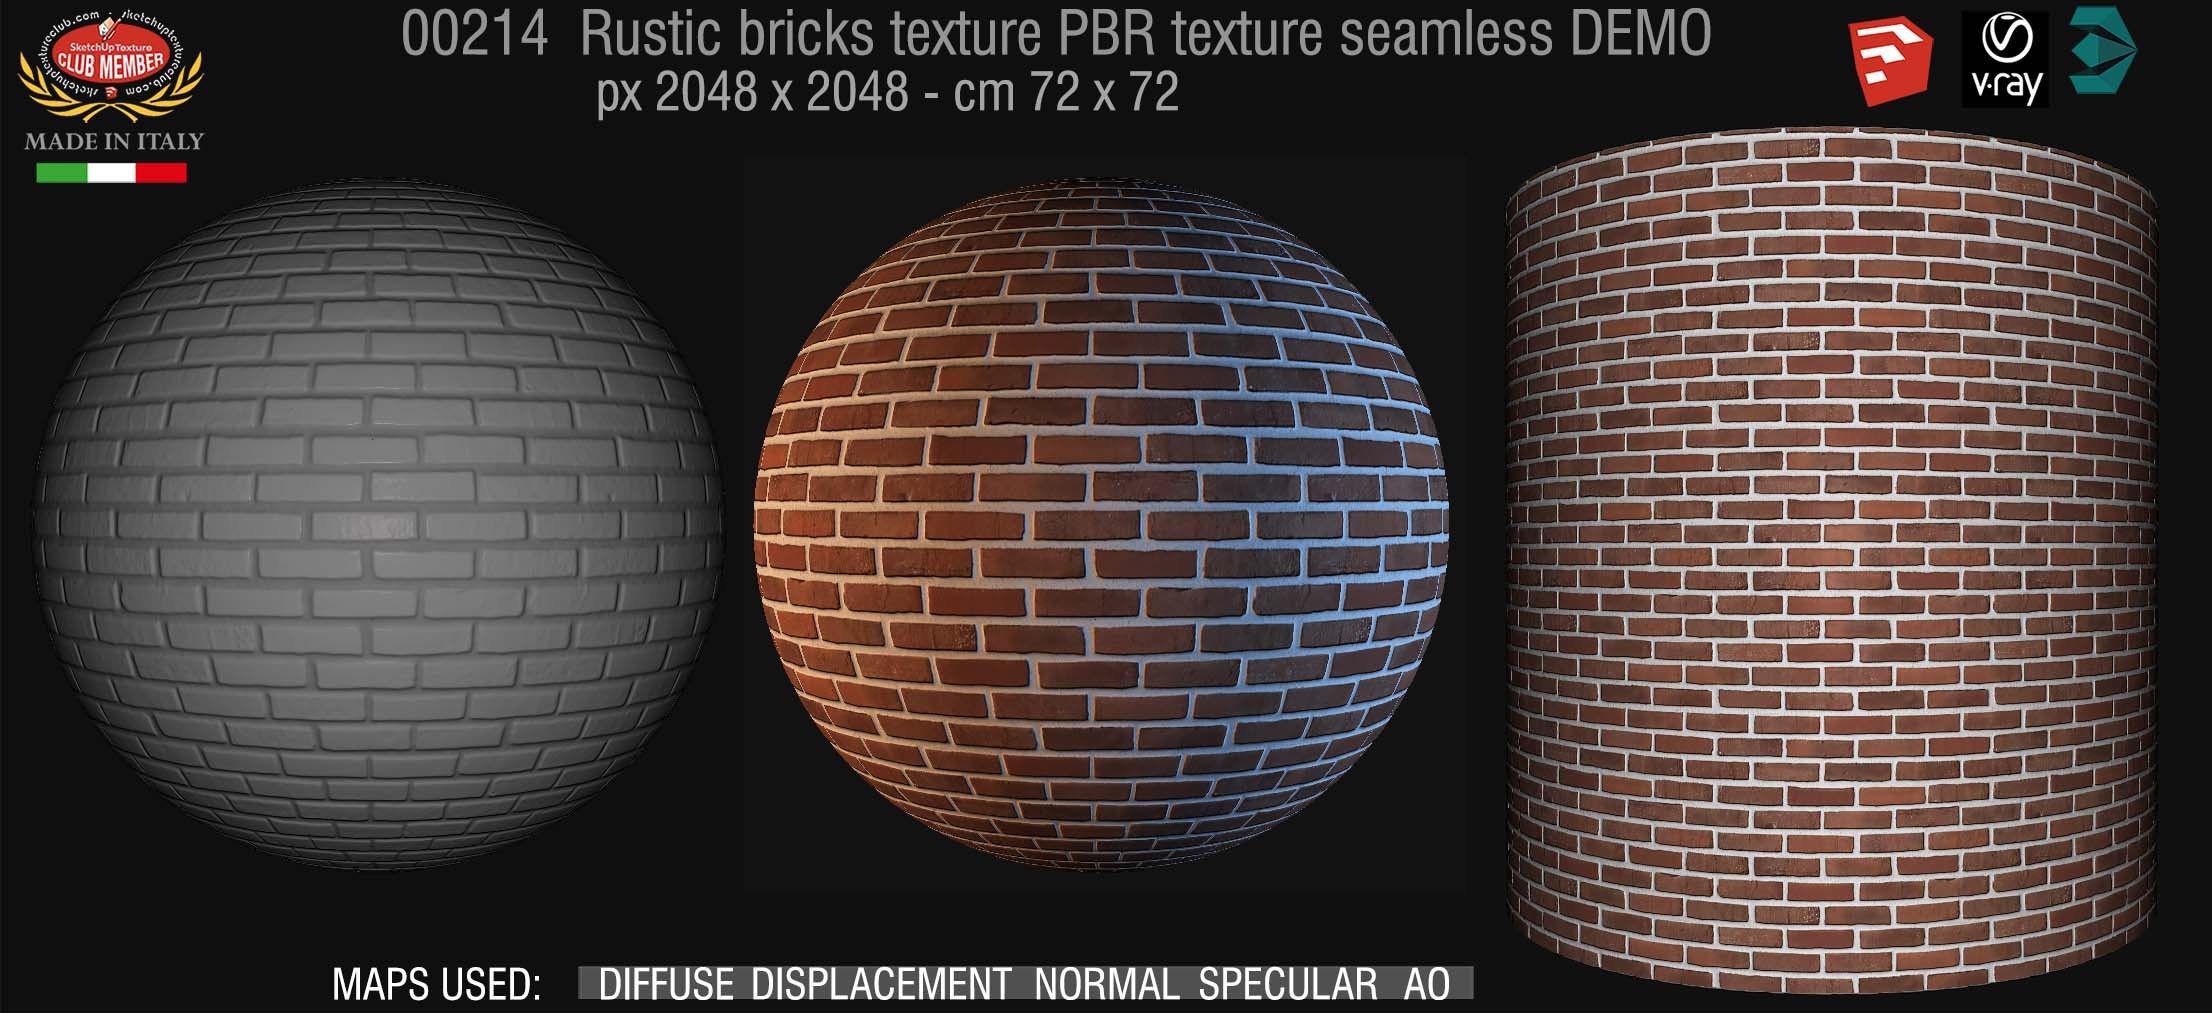 00214 rustic bricks PBR texture seamless DEMO